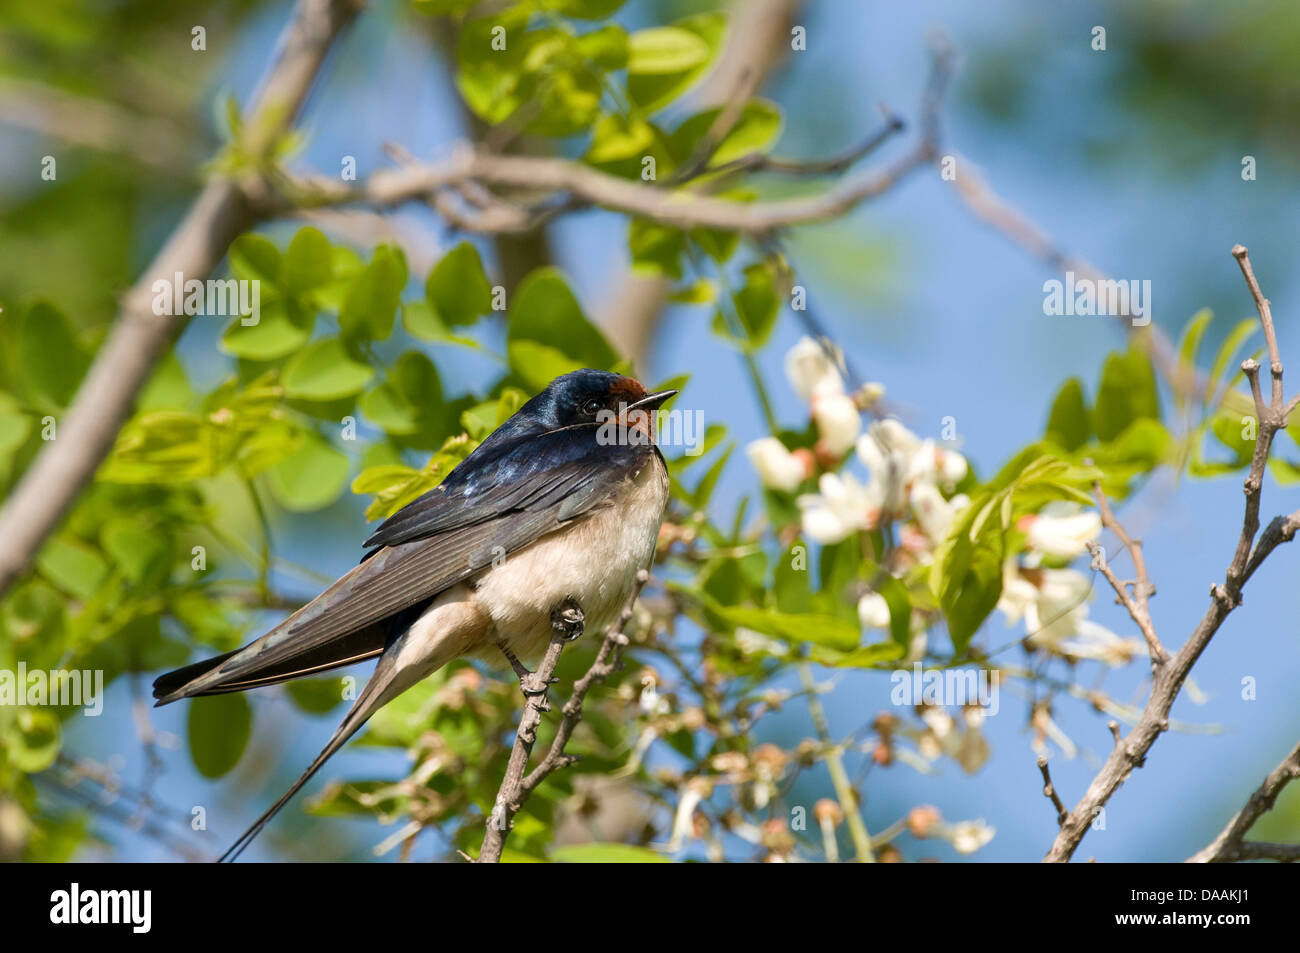 Europe, bird, branch, Swallow, Hirundo rustica Stock Photo